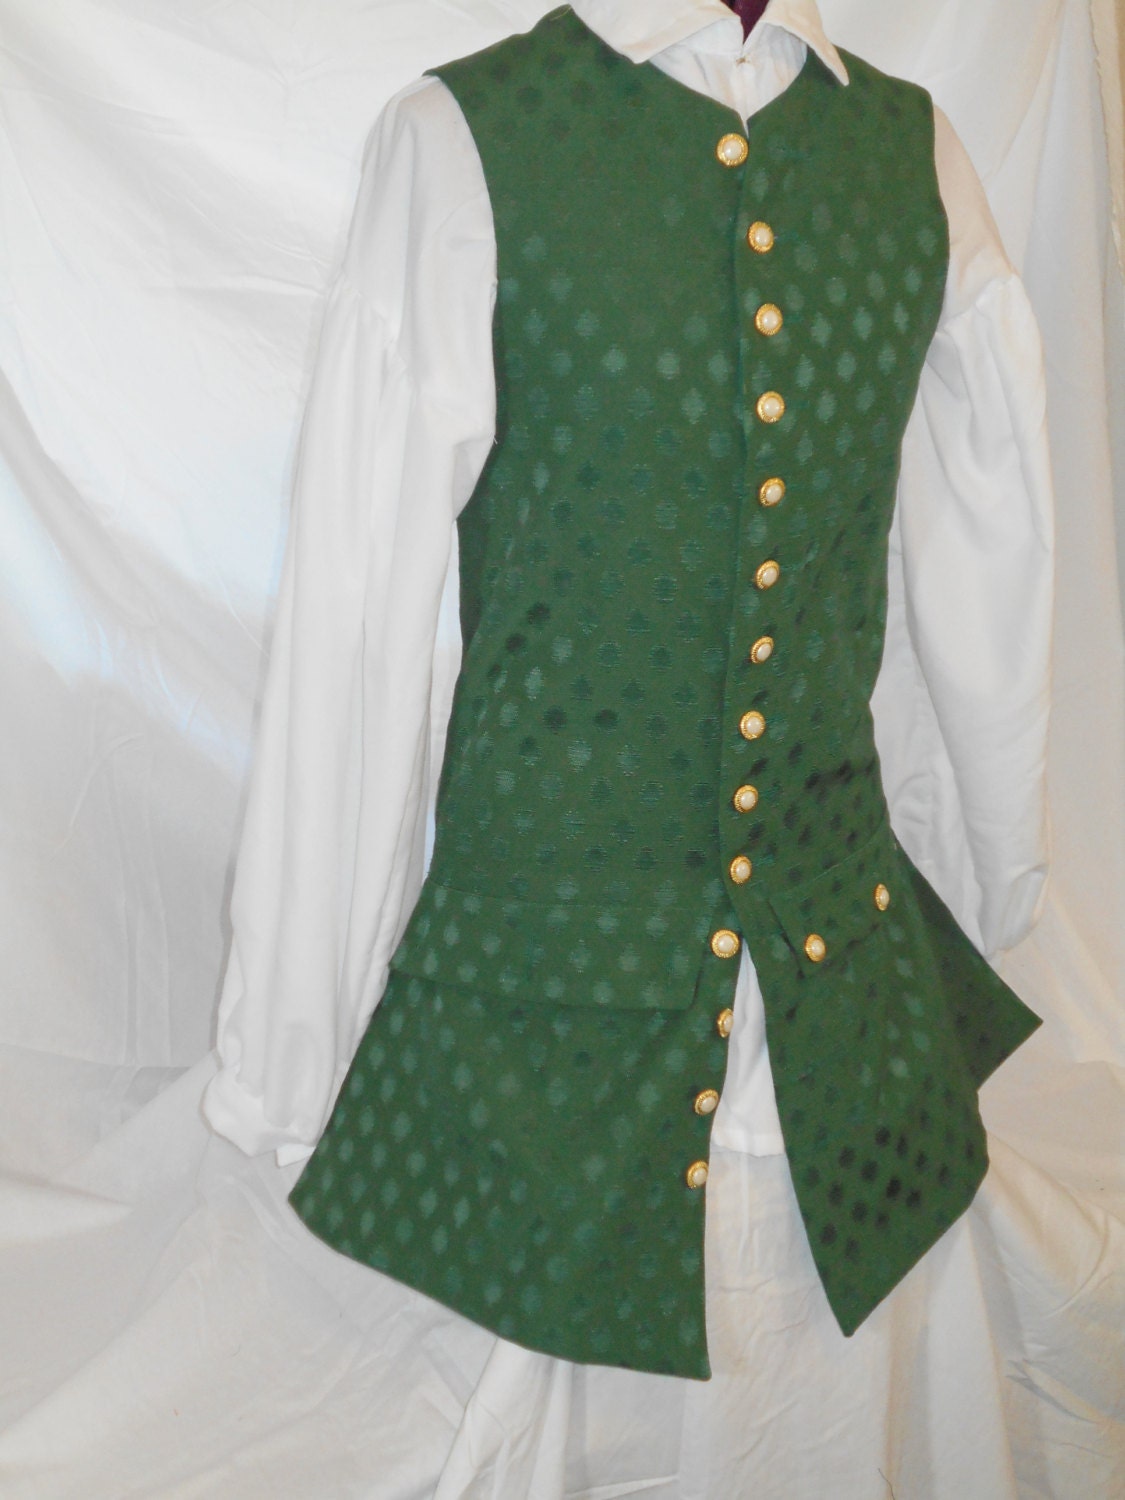 XSmall Emerald Green Men's Colonial Pirate Waistcoat Vest